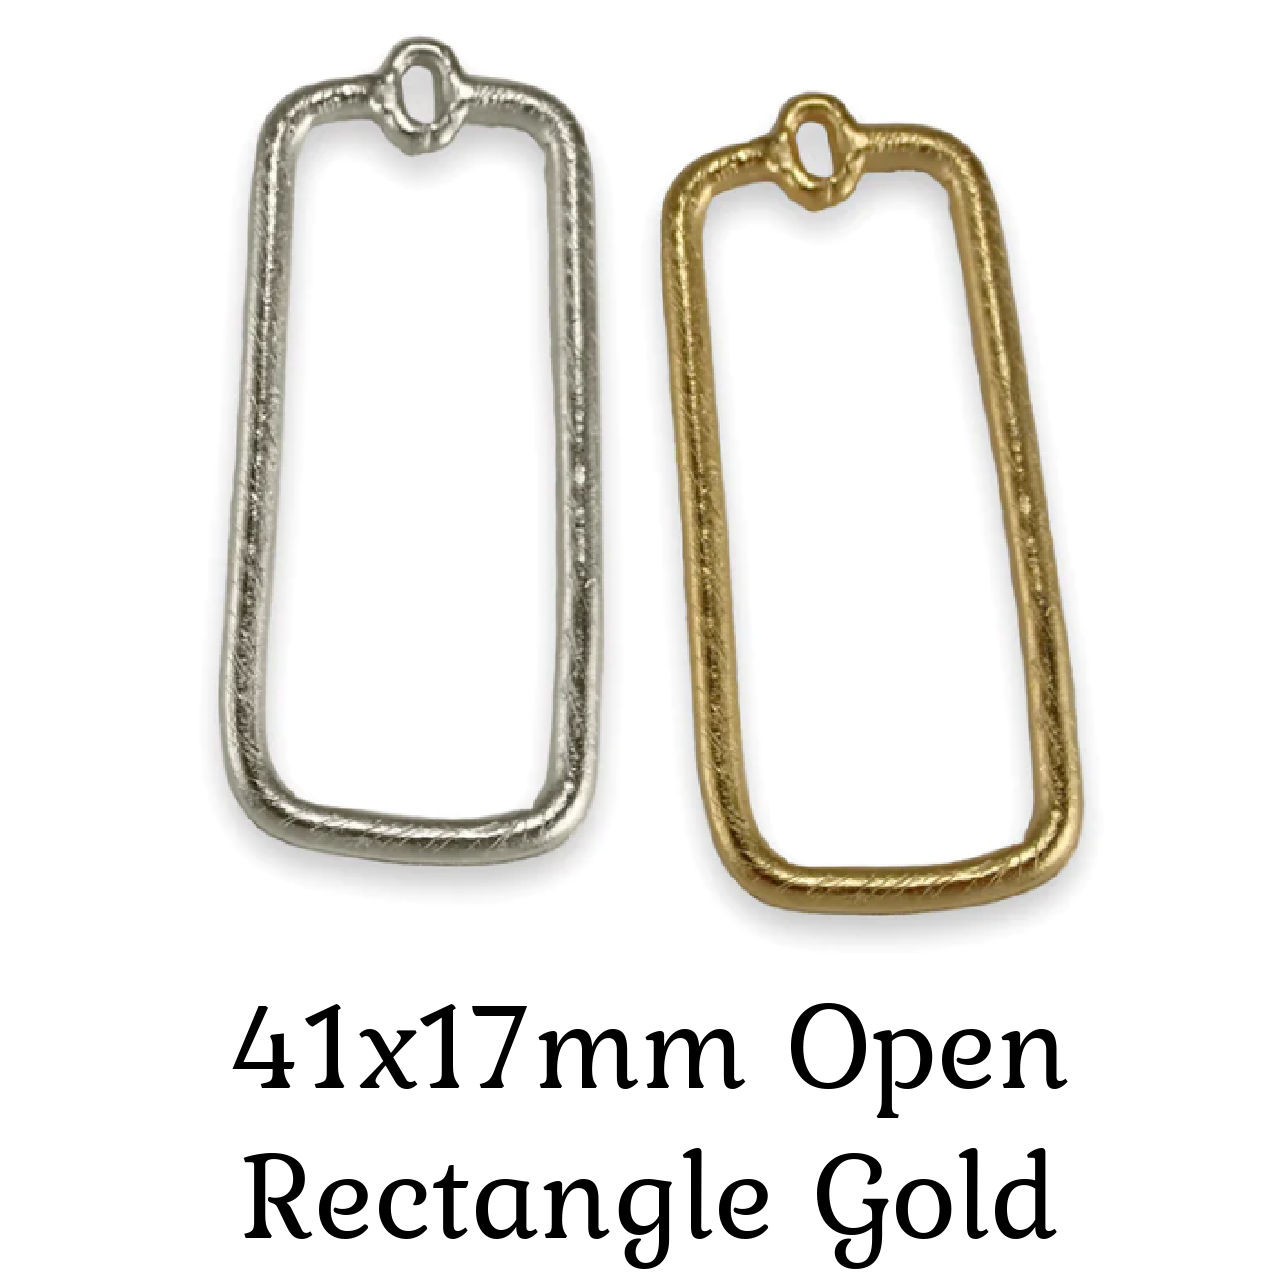 41x17mm Open Rectangle Gold